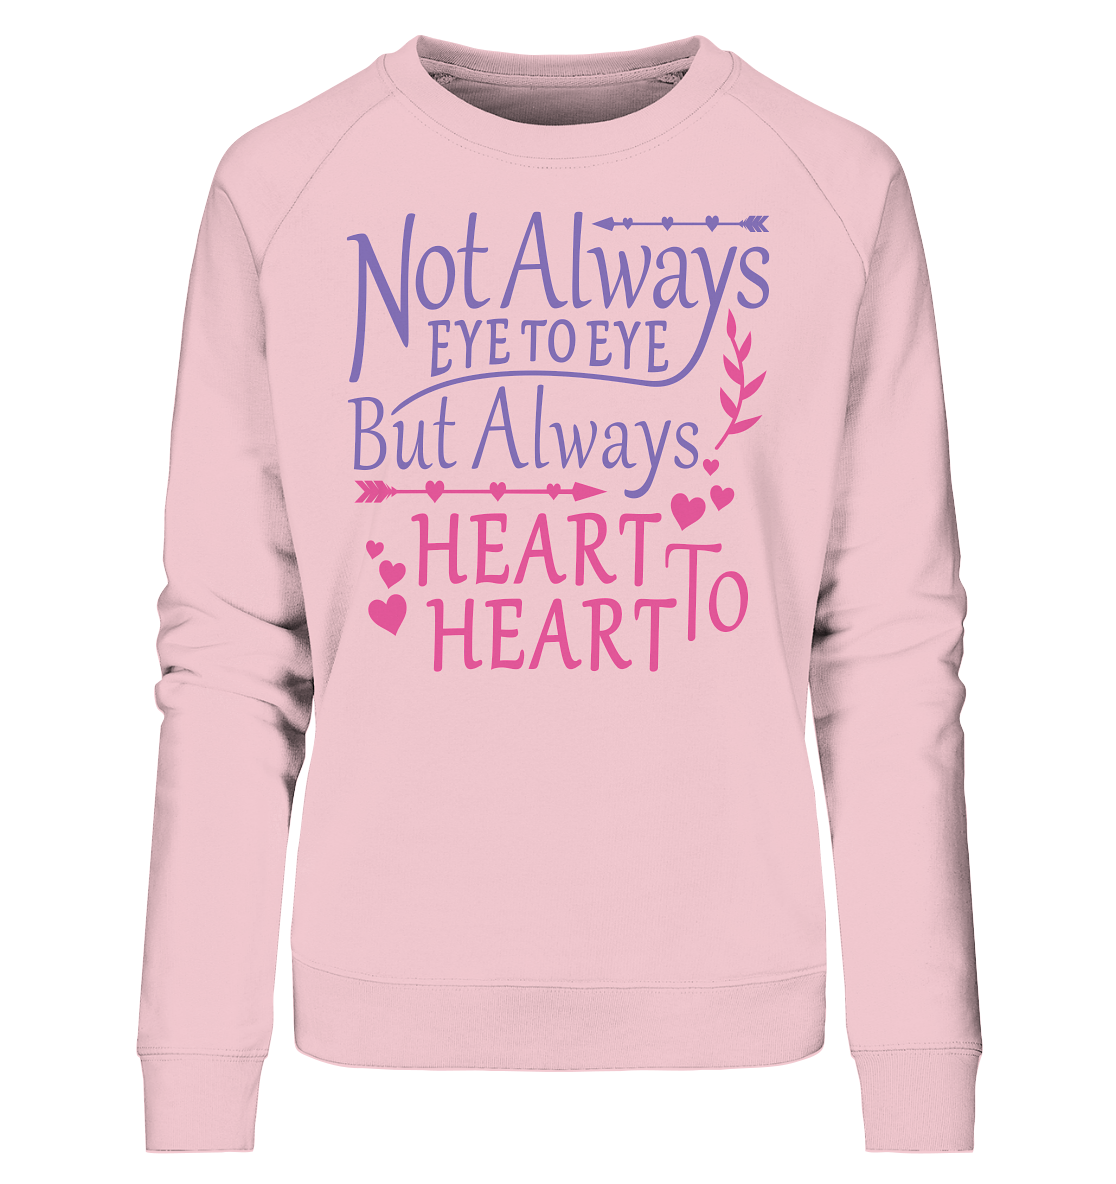 Not always eye to eye but always heart to heart - Ladies Organic Sweatshirt